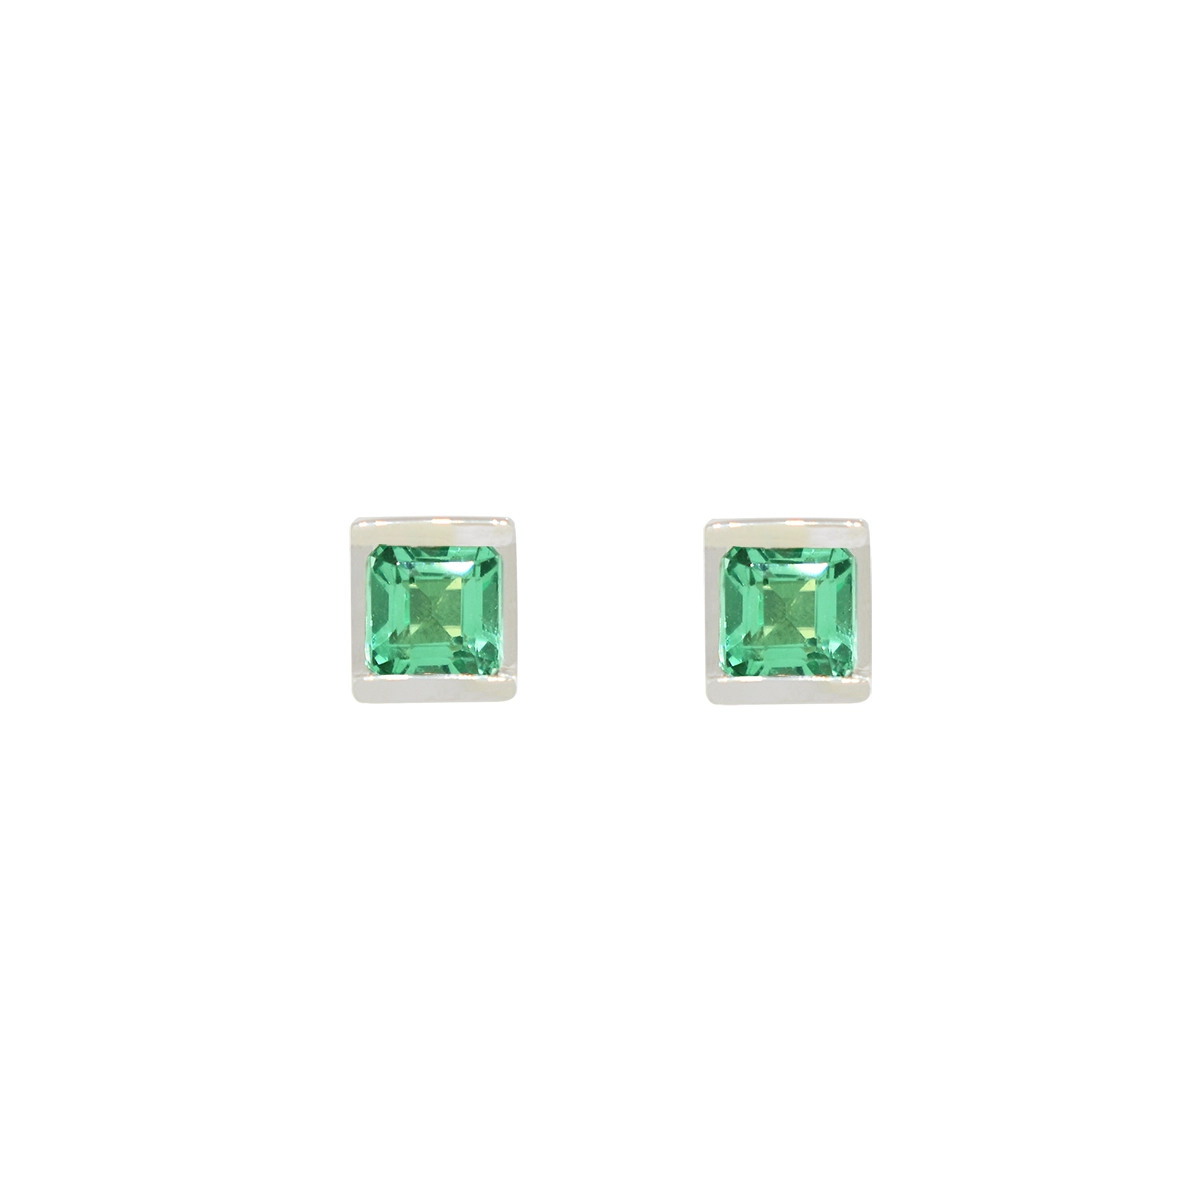 Small Half Bezel Setting Emerald Stud Earrings in 18K White Gold